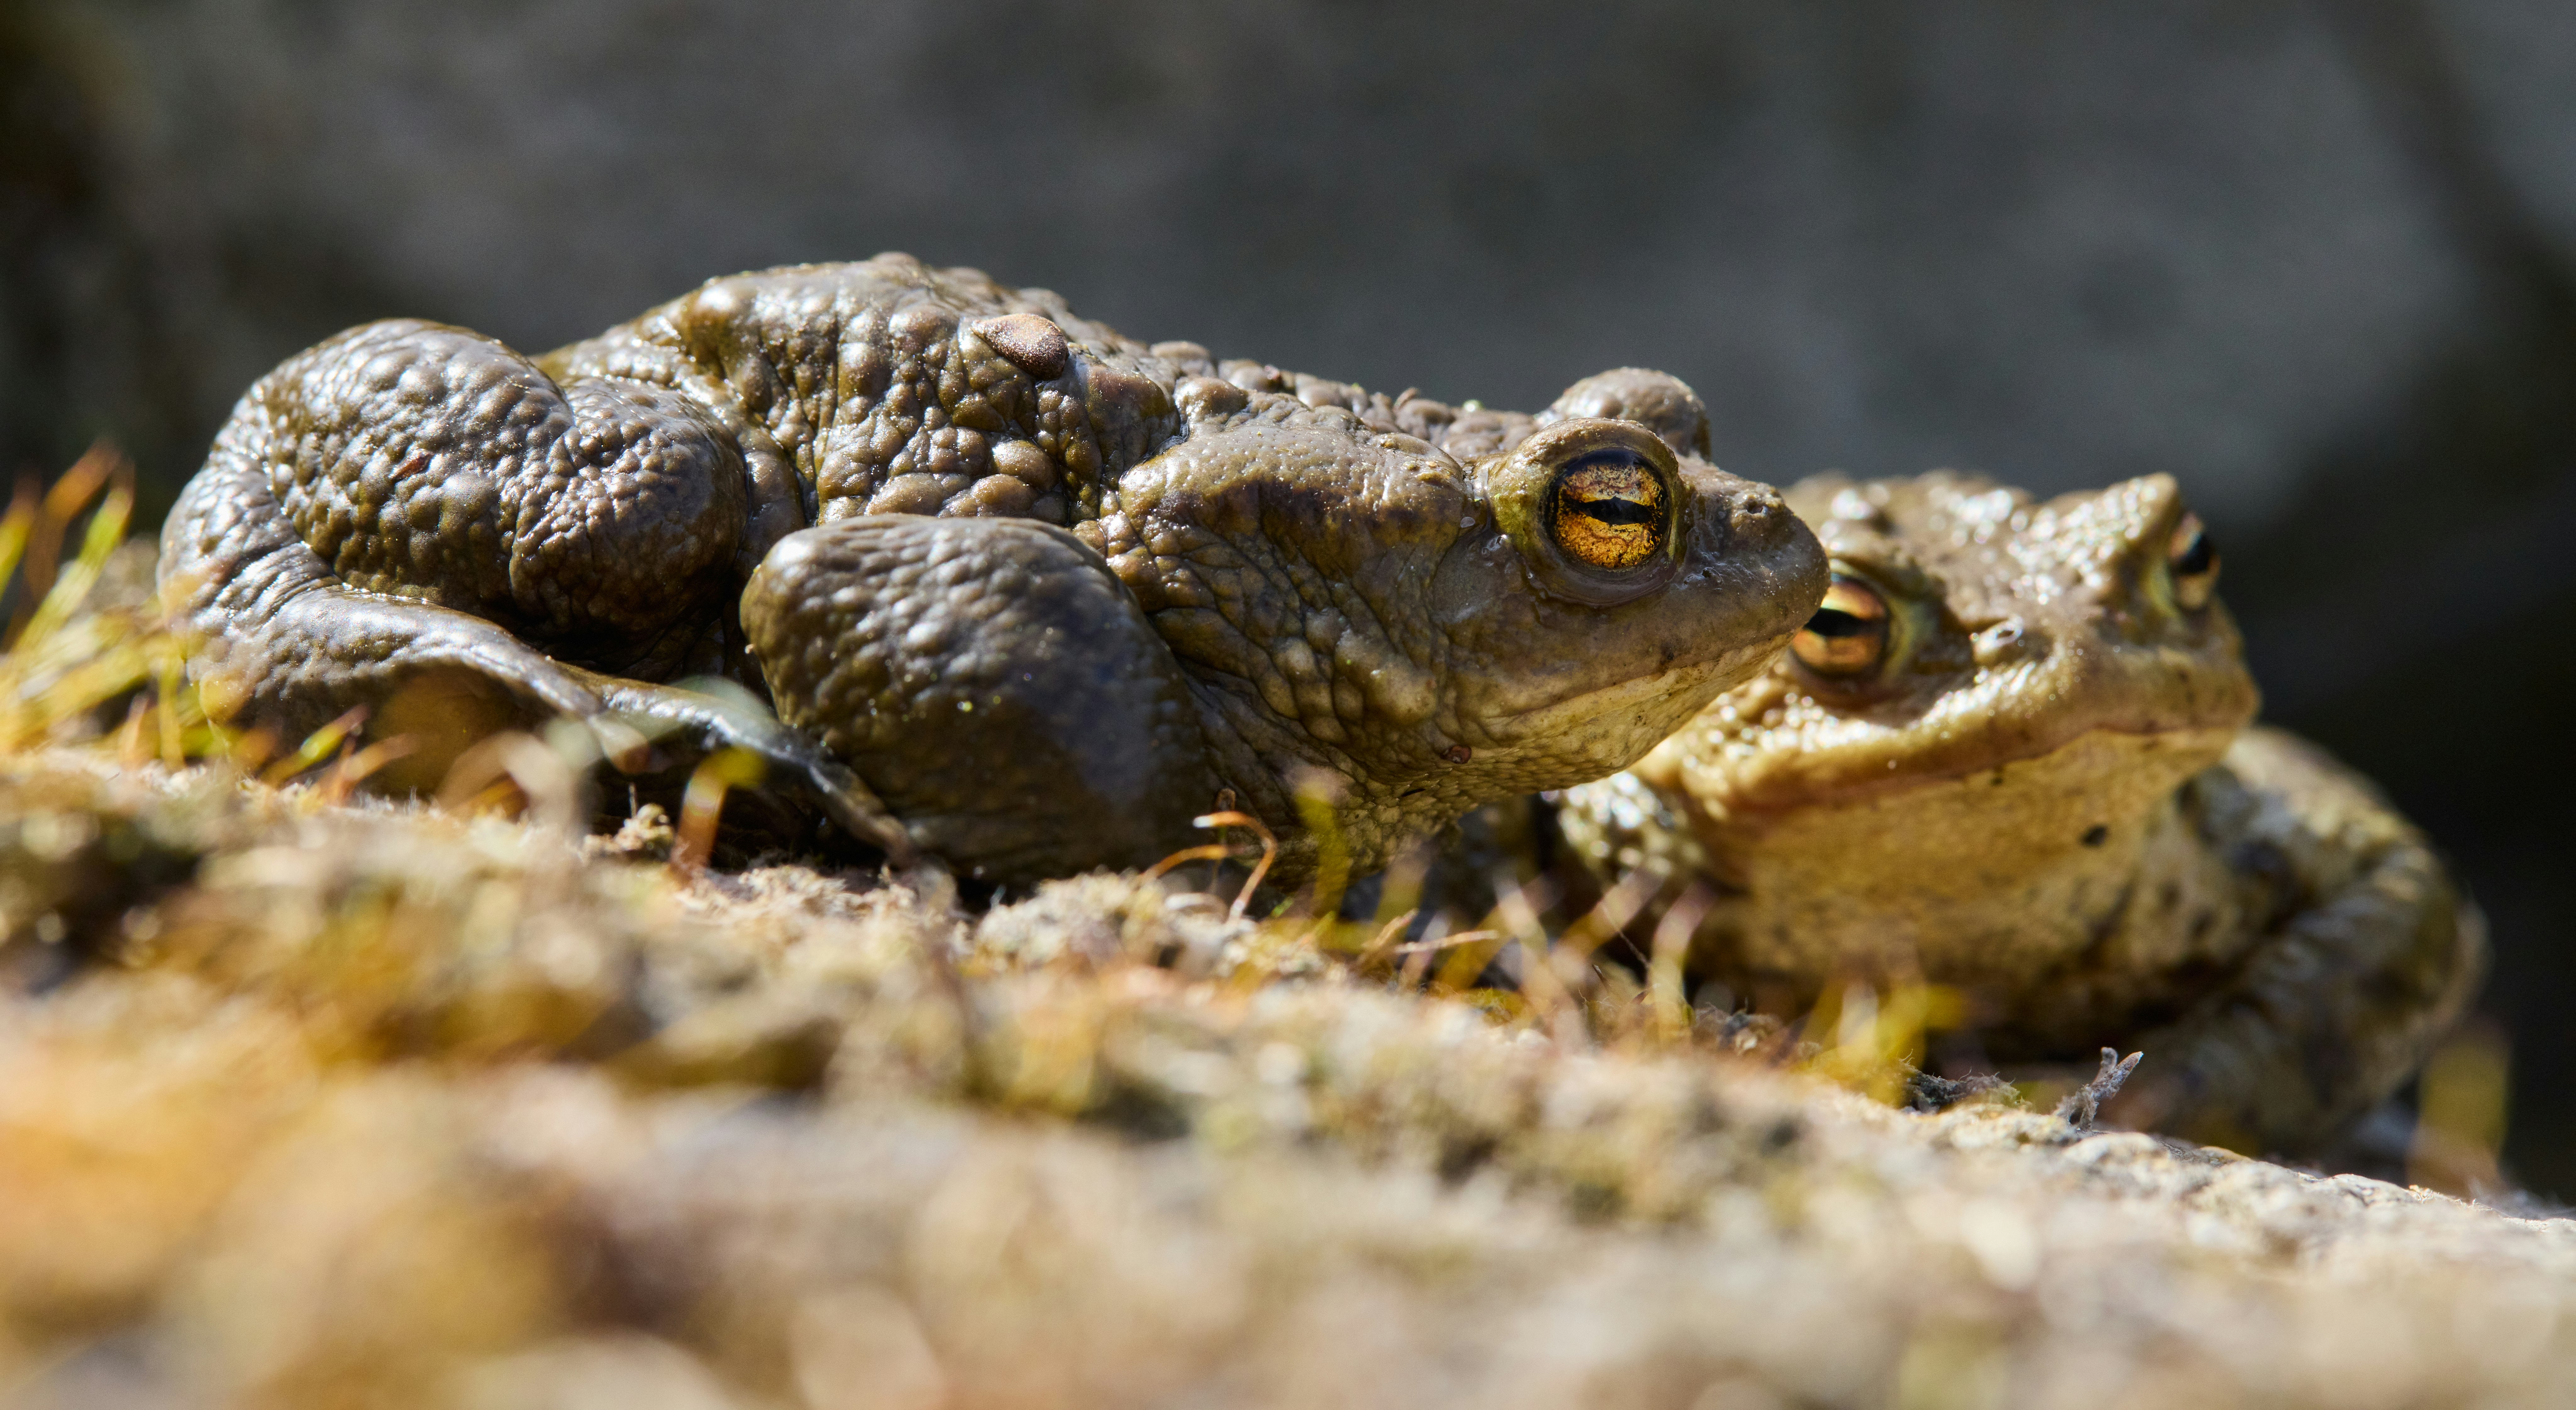 brown frog on brown soil